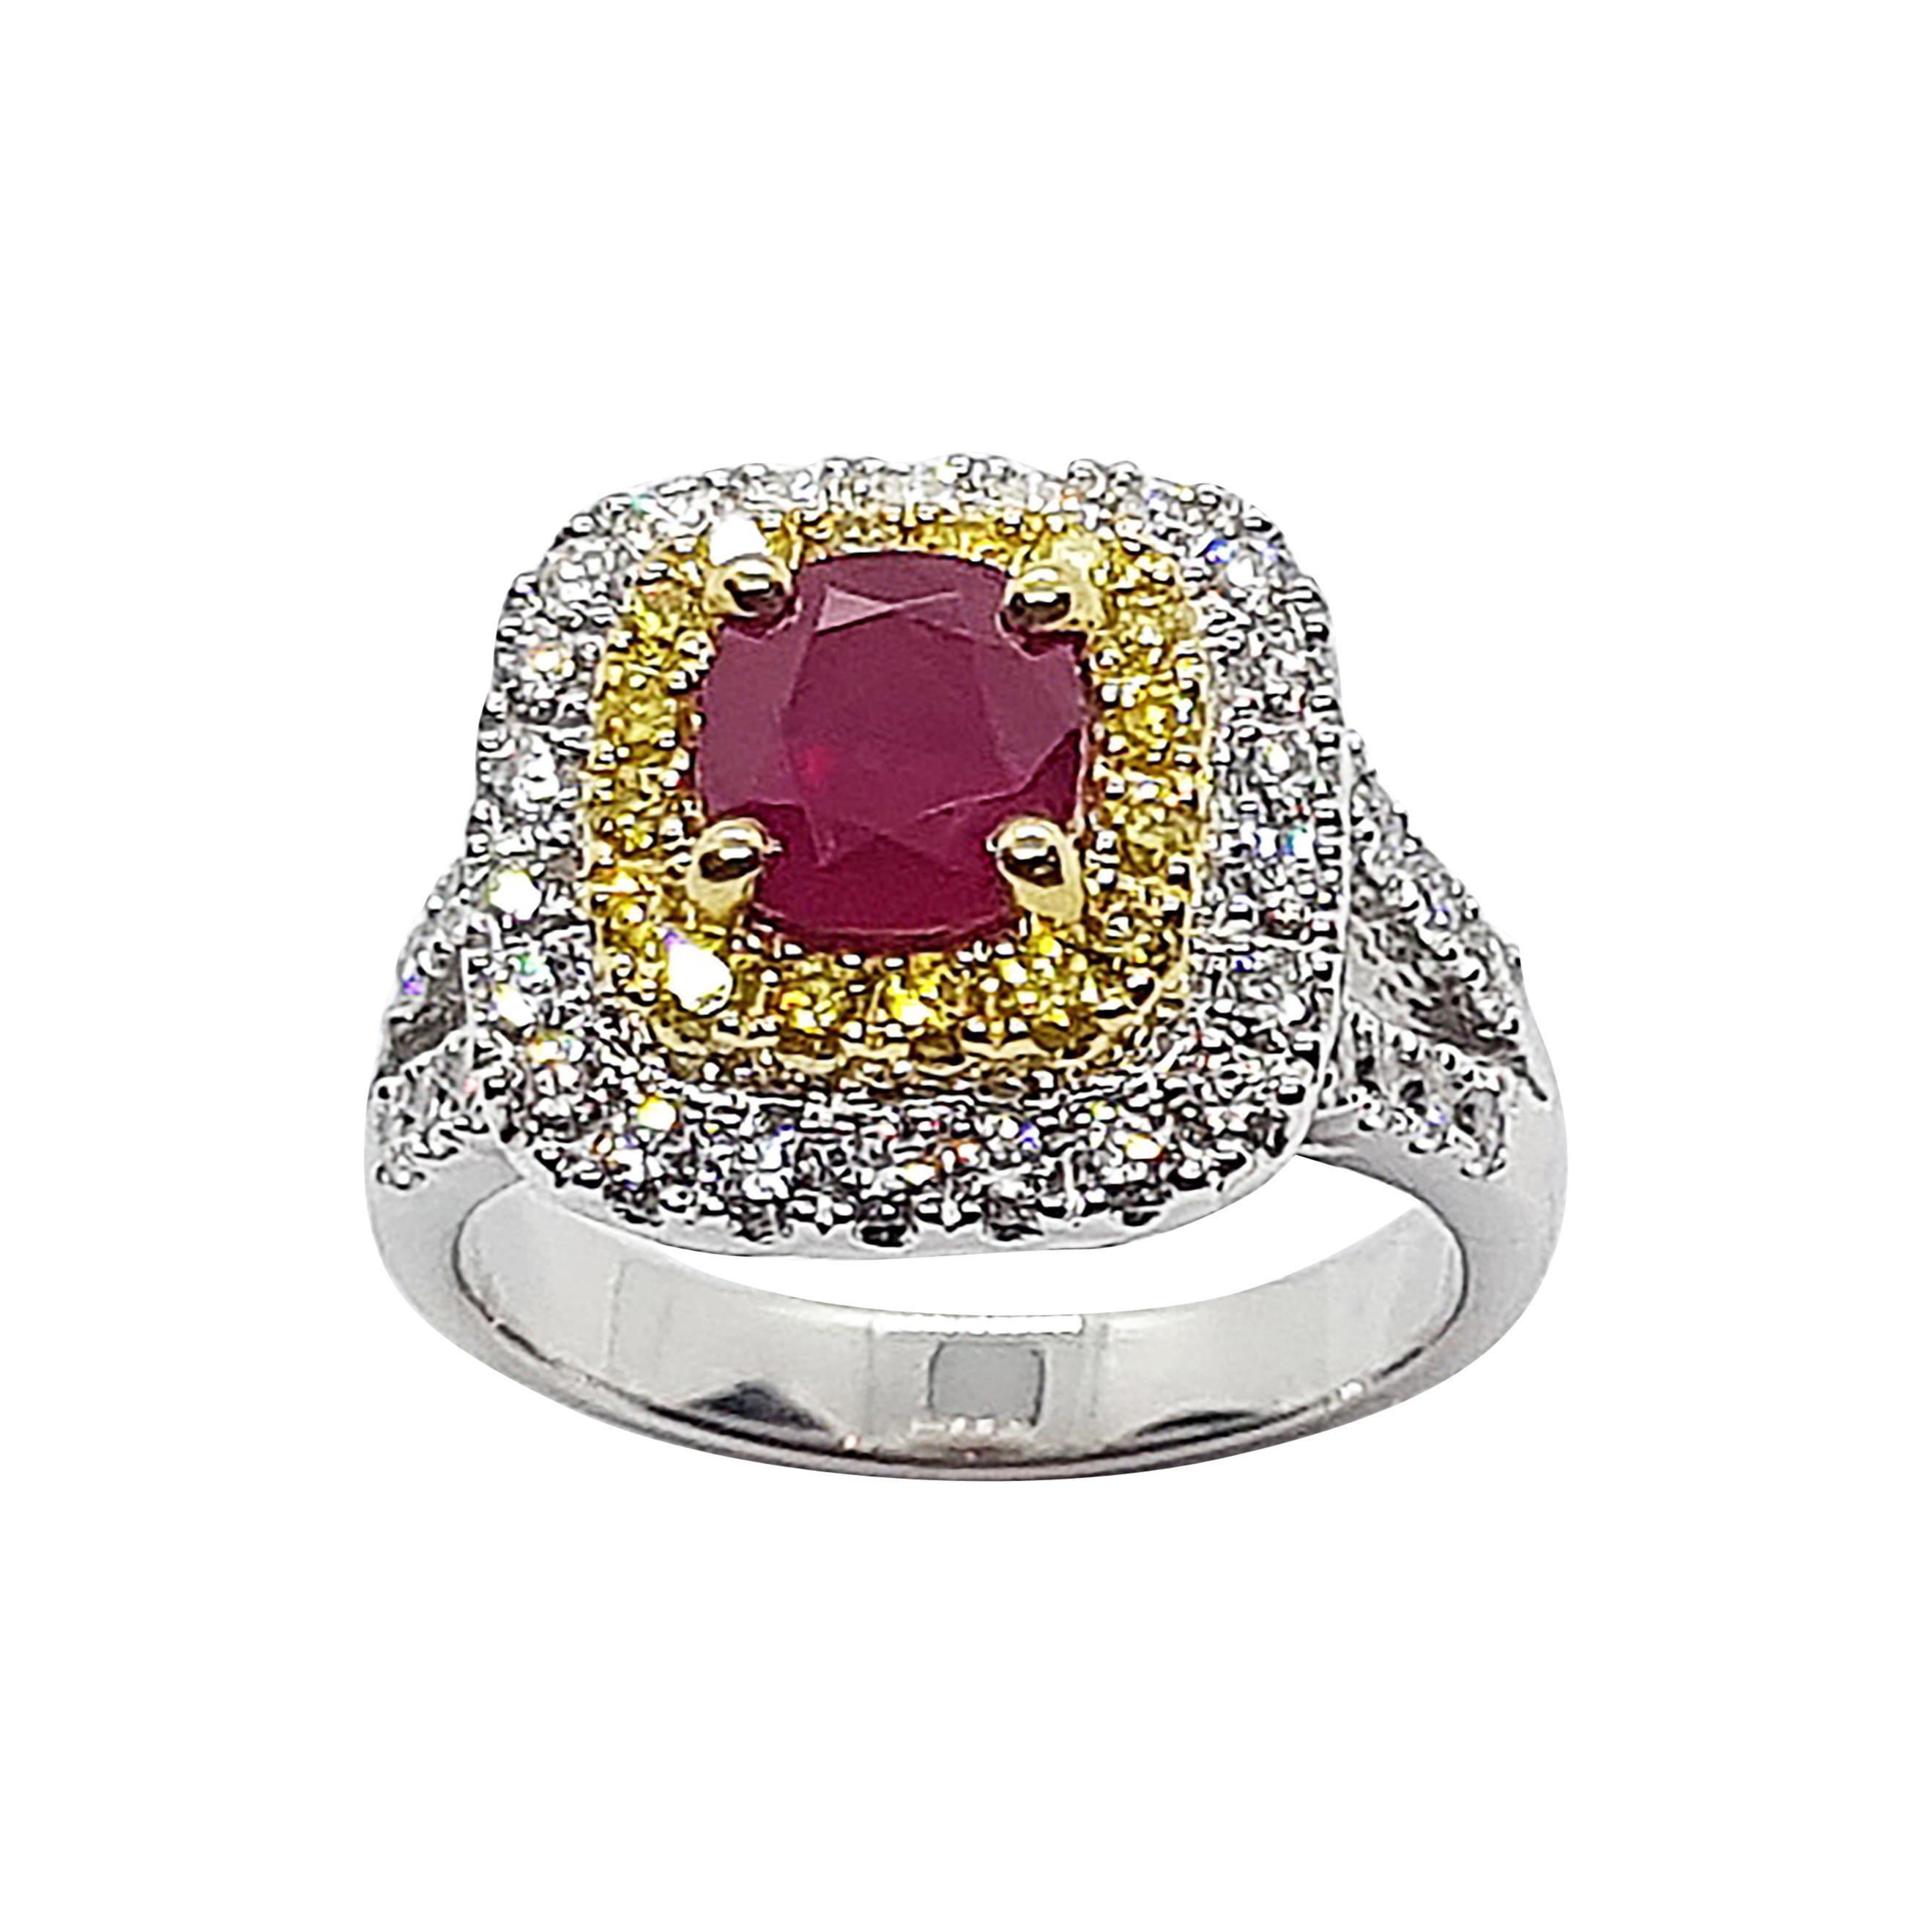 Certified Burmese Ruby, Diamond and Yellow Diamond Ring in 18 Karat White Gold